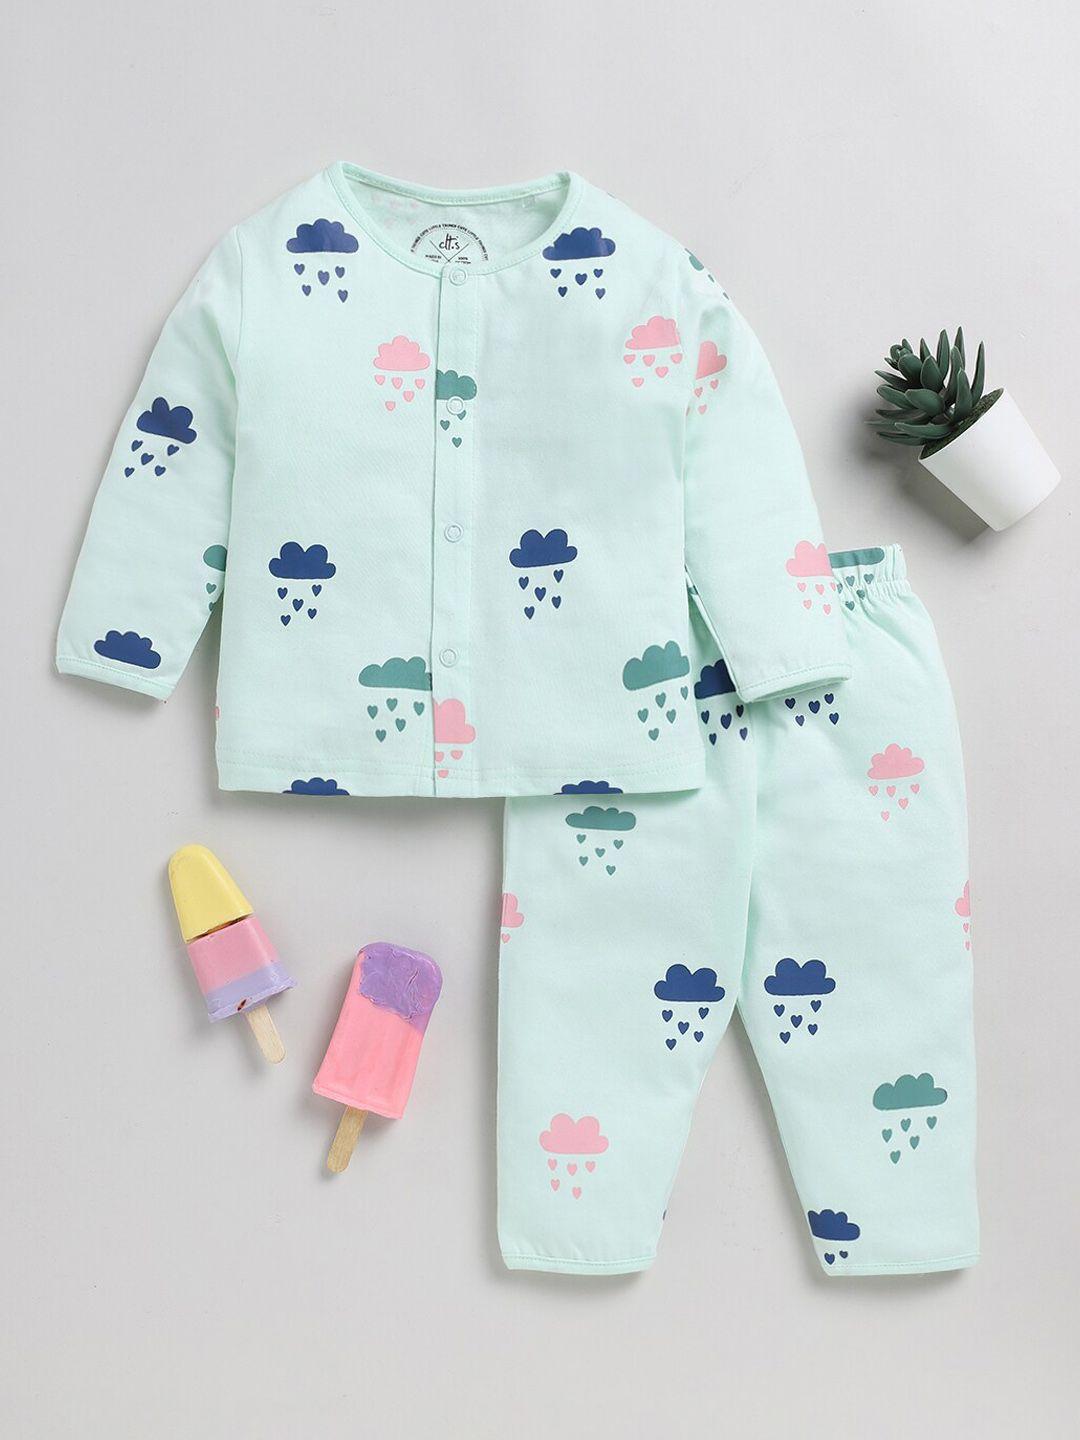 clt.s infants printed cotton shirt and pyjamas night suit